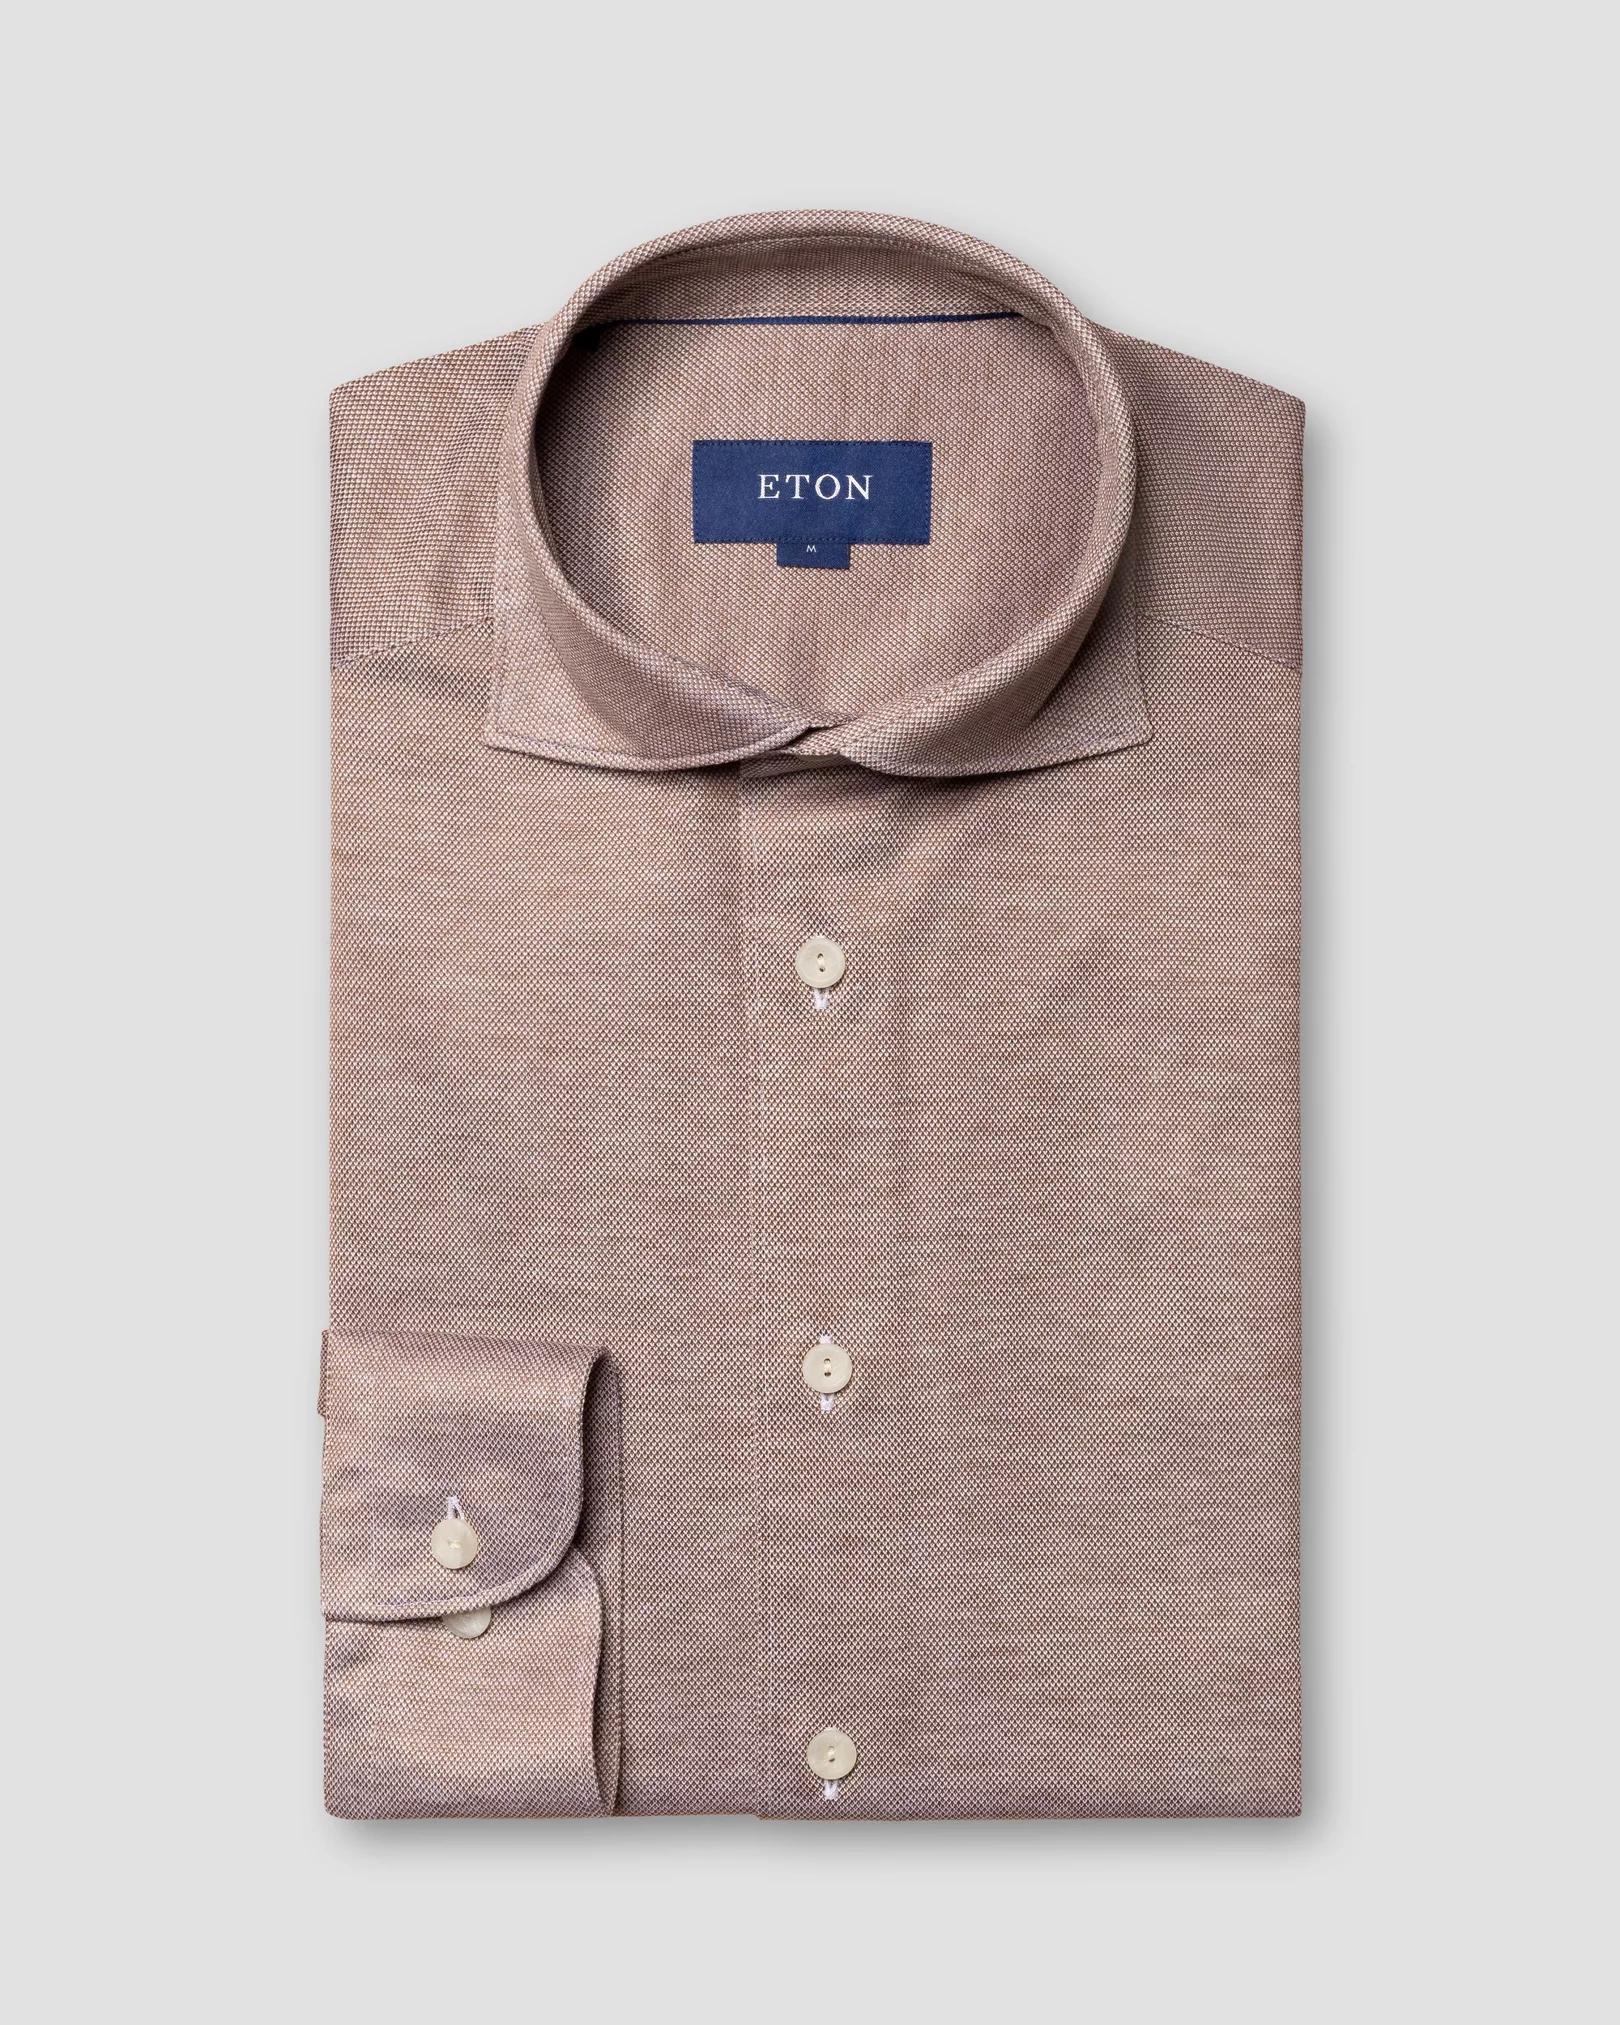 Eton - brown oxford pique shirt